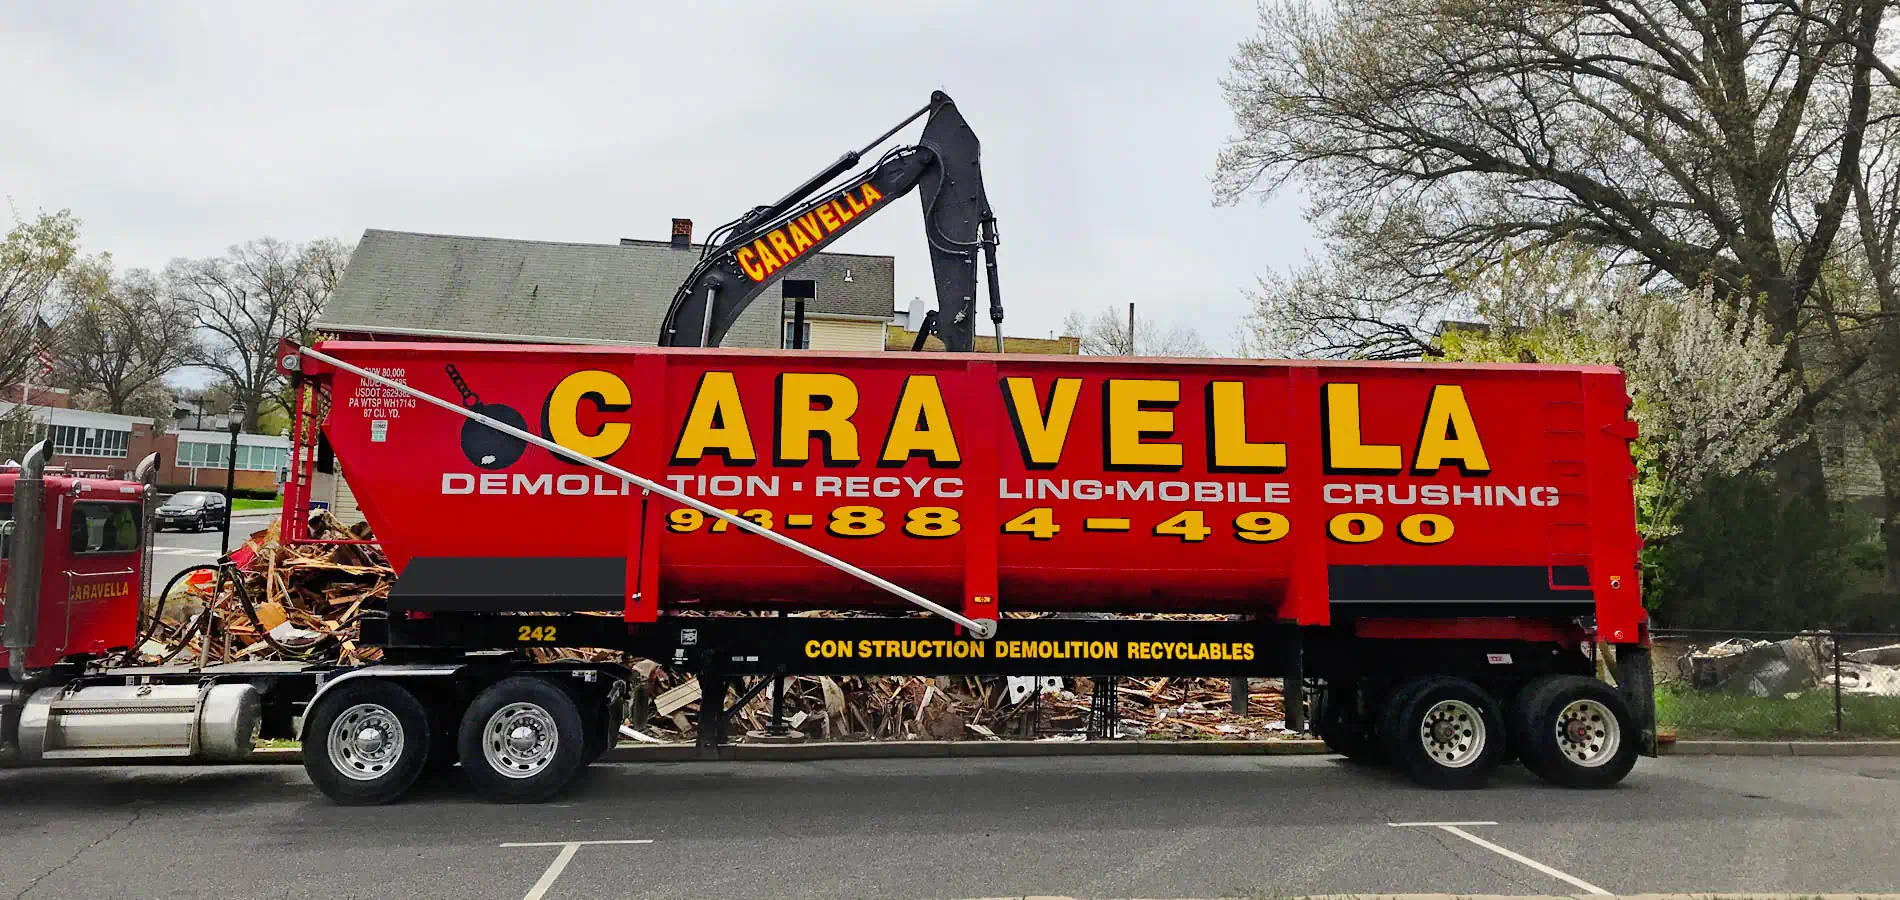 Demolition Services in Phillipsburg, NJ 08865 | Caravella Demolition